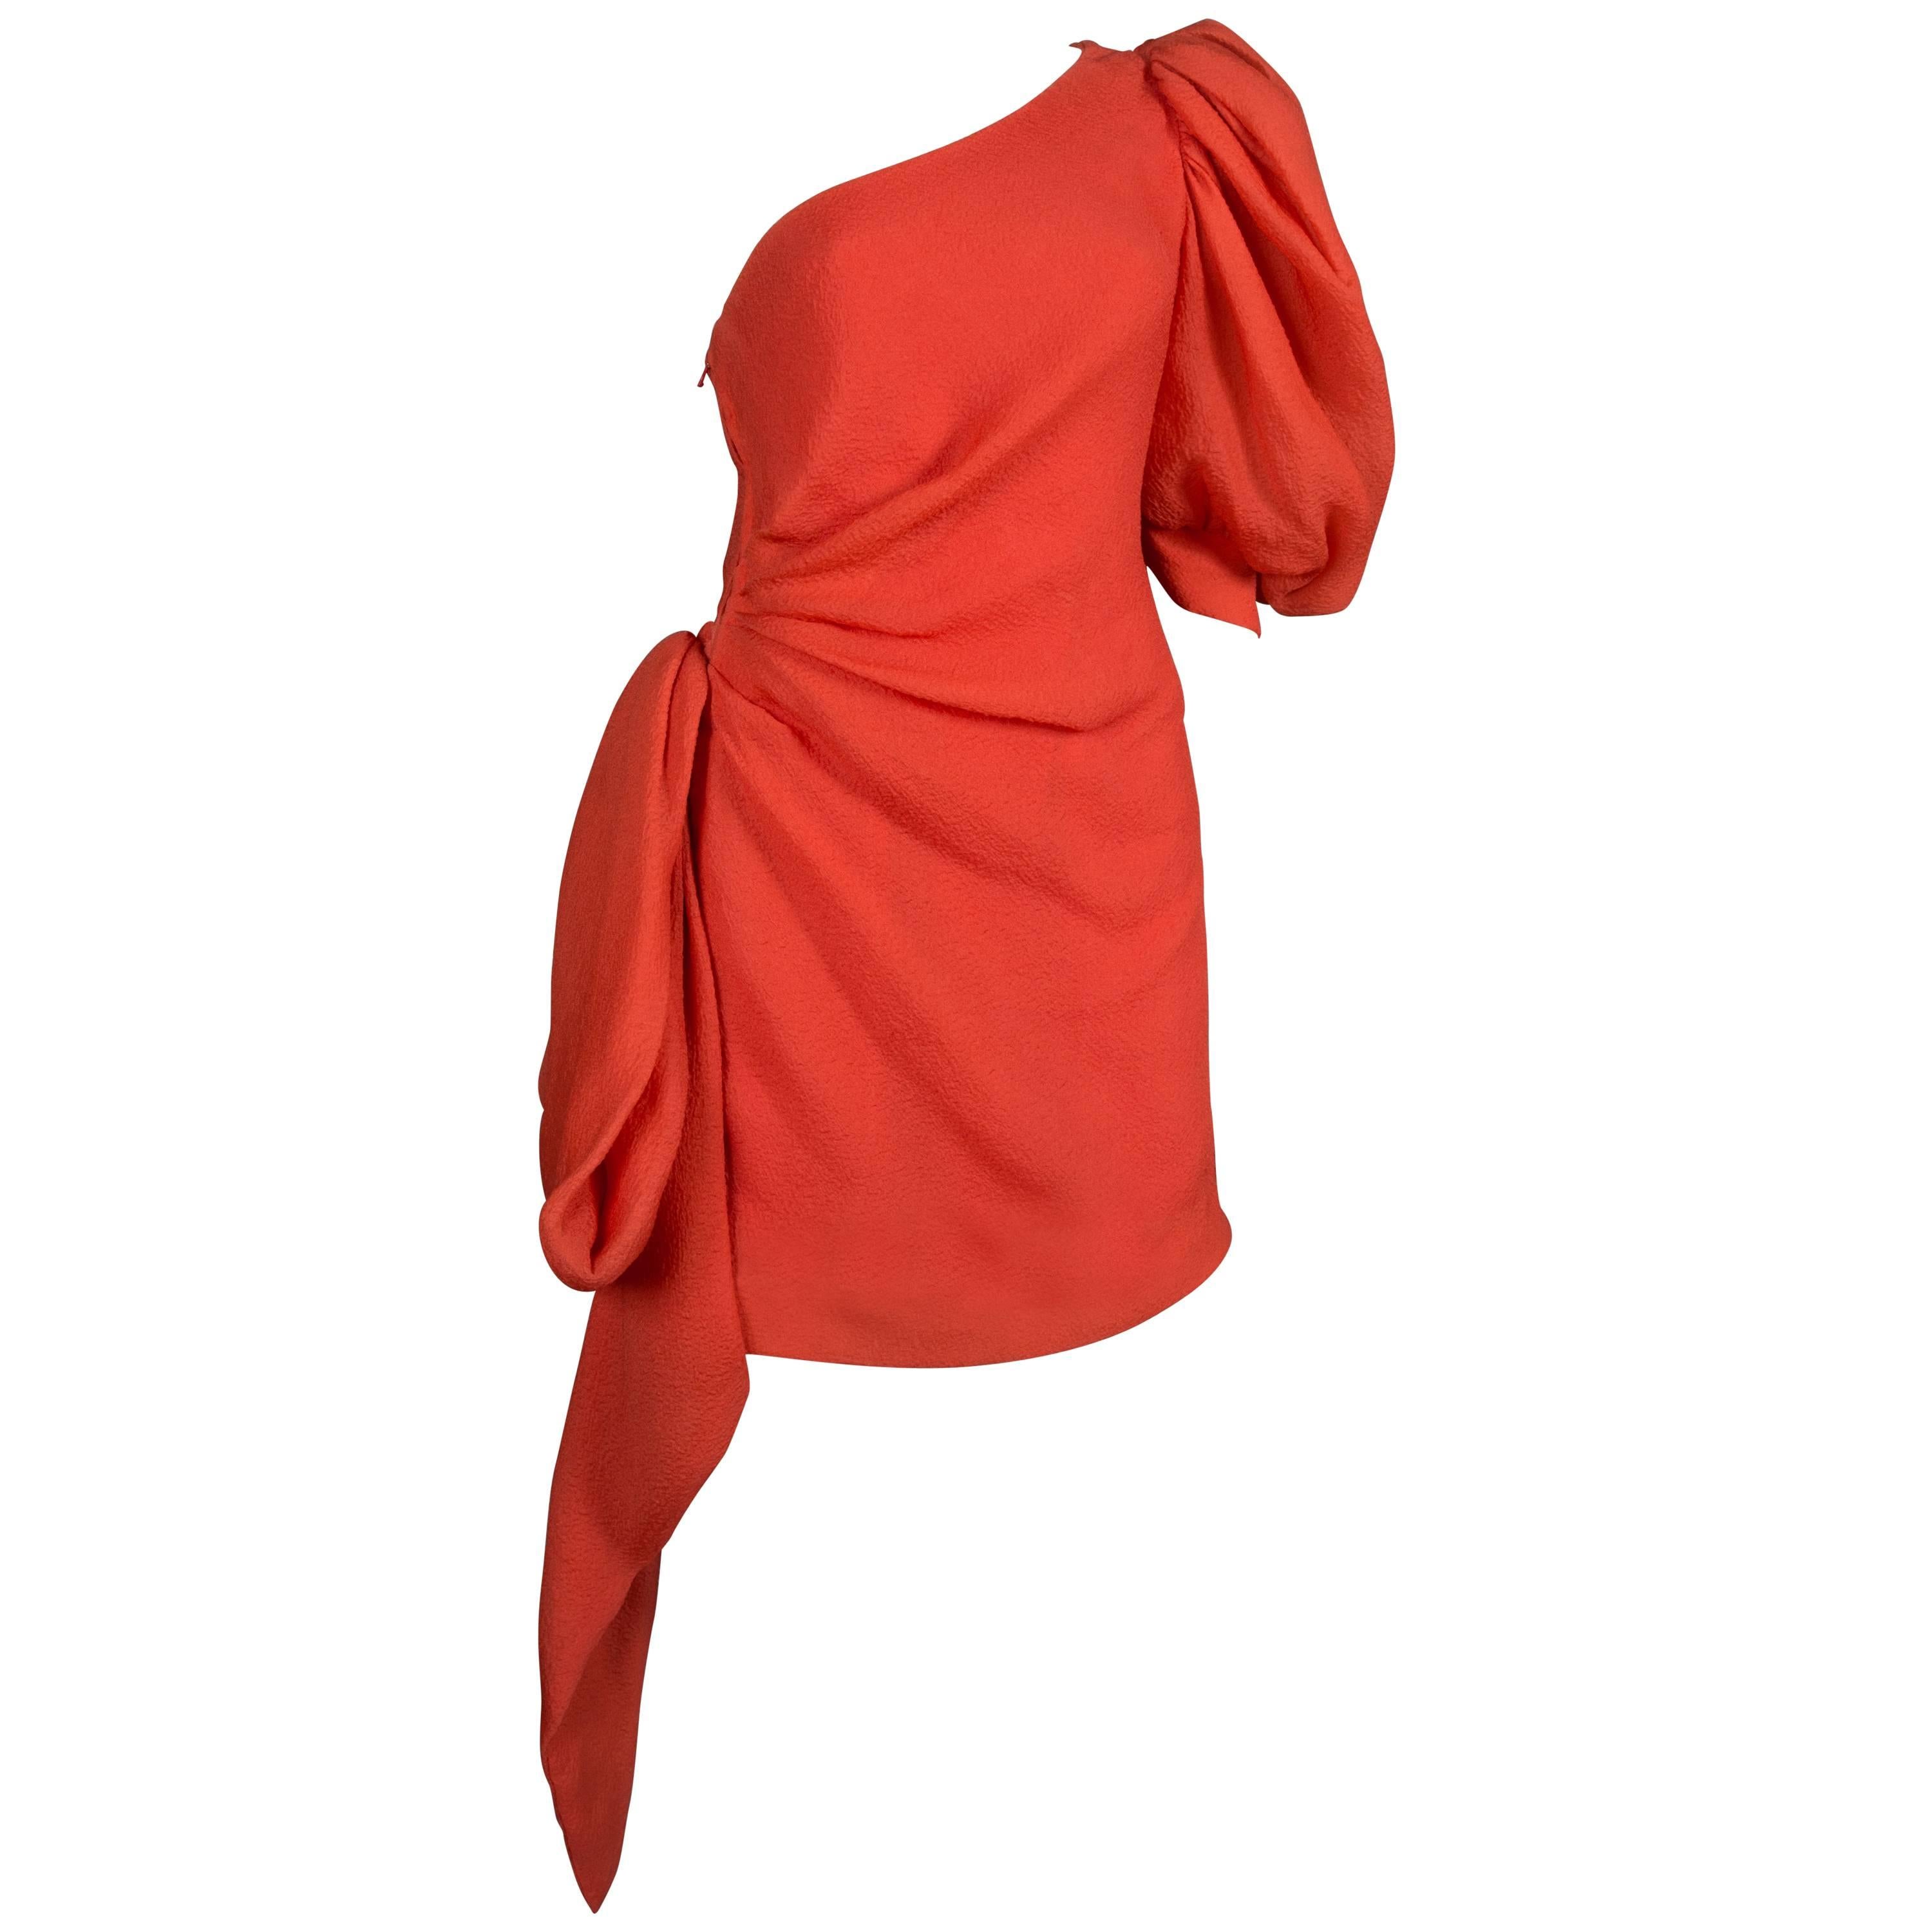 Givenchy silk crêpe coral cocktail dress, c. 1988